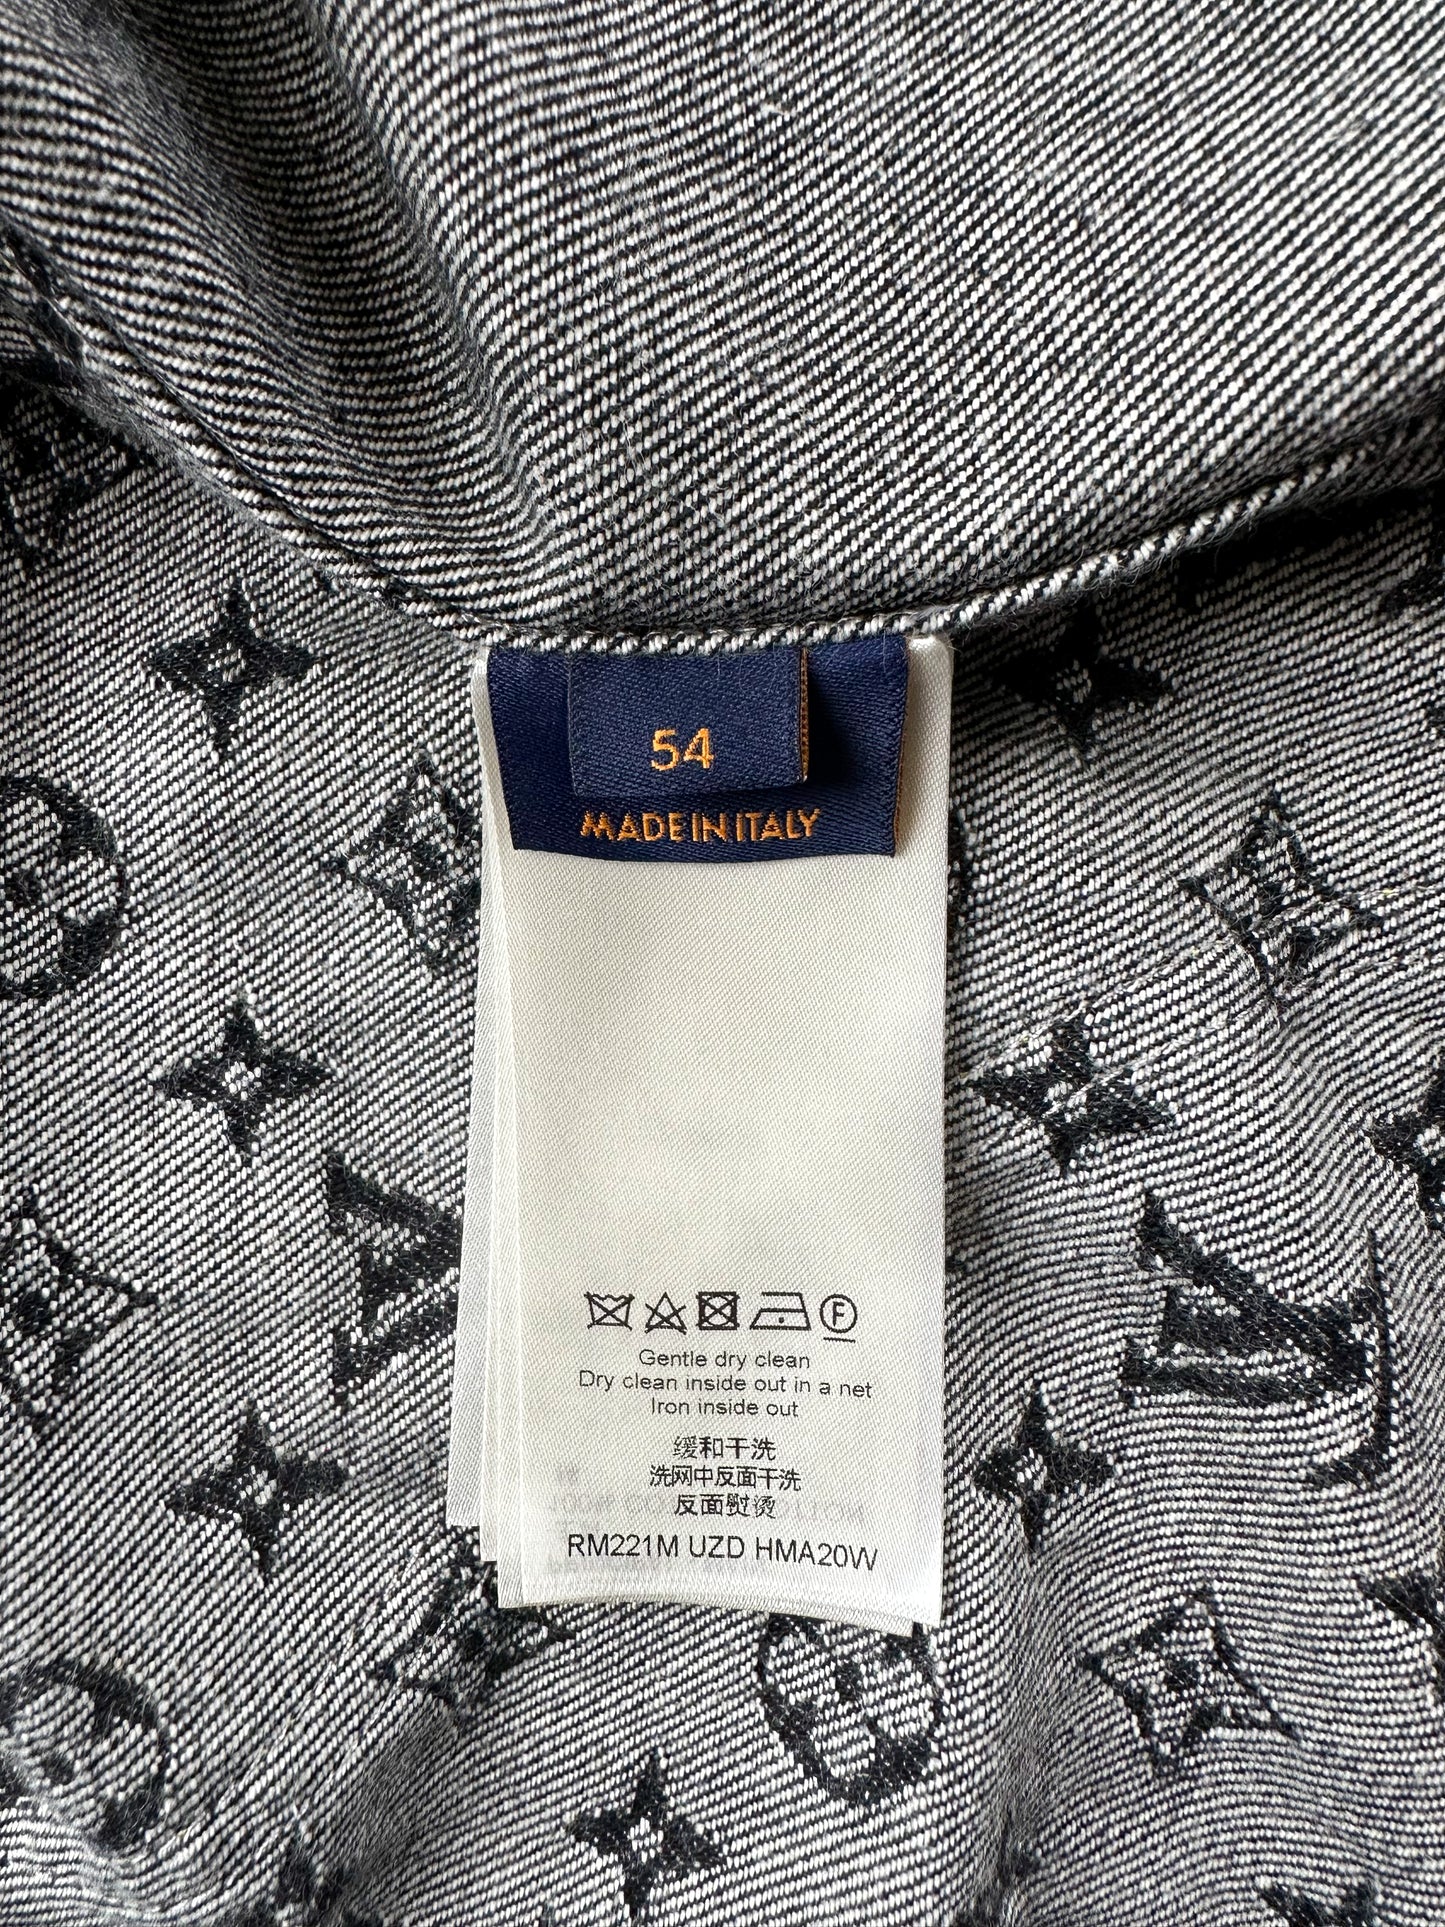 Louis Vuitton vintage monogram denim jacket size 40 1695.00❌sold❌